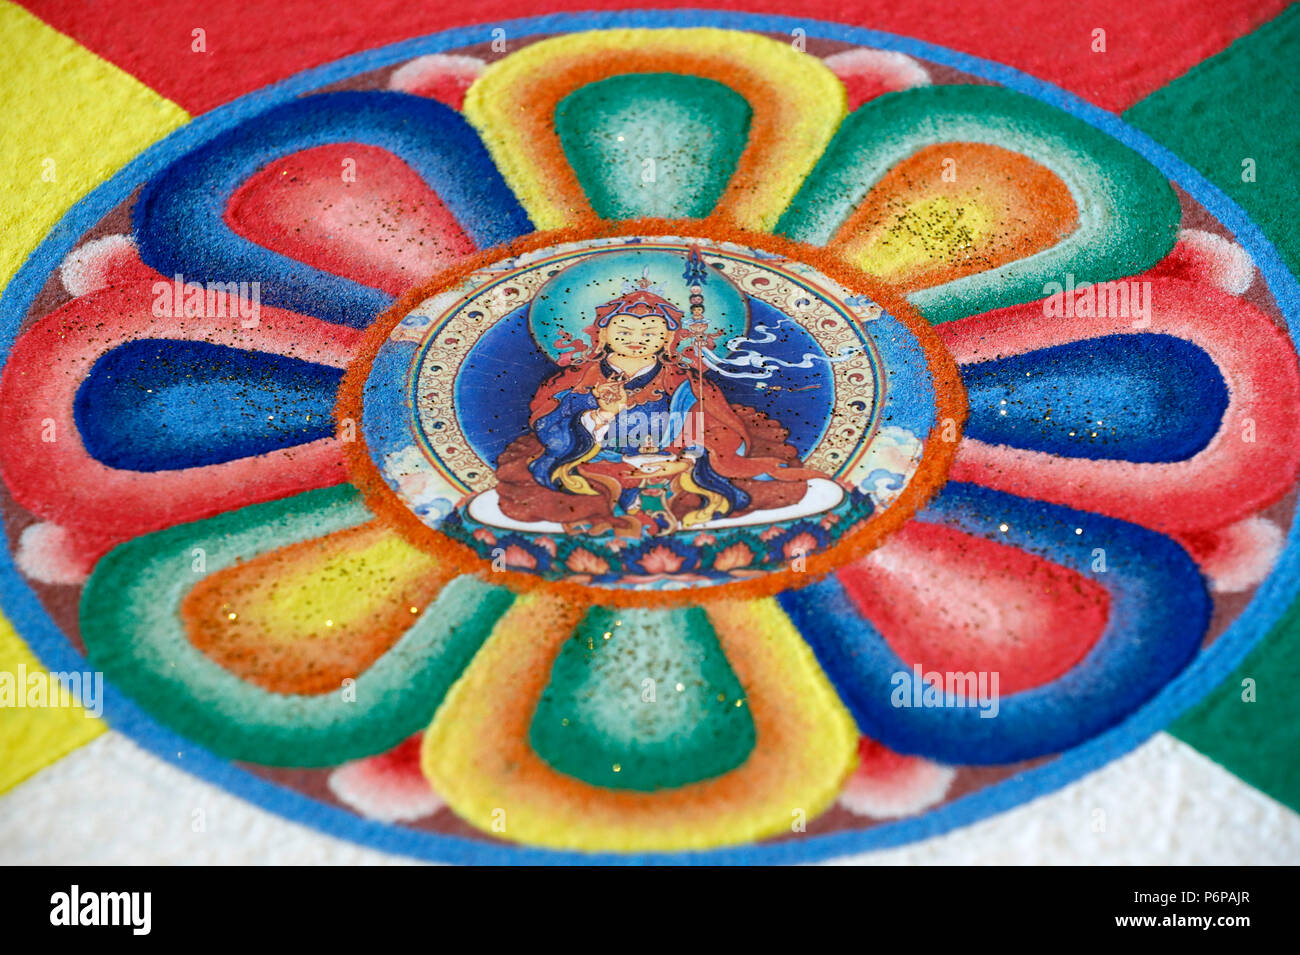 Buddista Tibetana mandala di sabbia. Padmasambhava noto anche come guru Rinpoche. Foto Stock